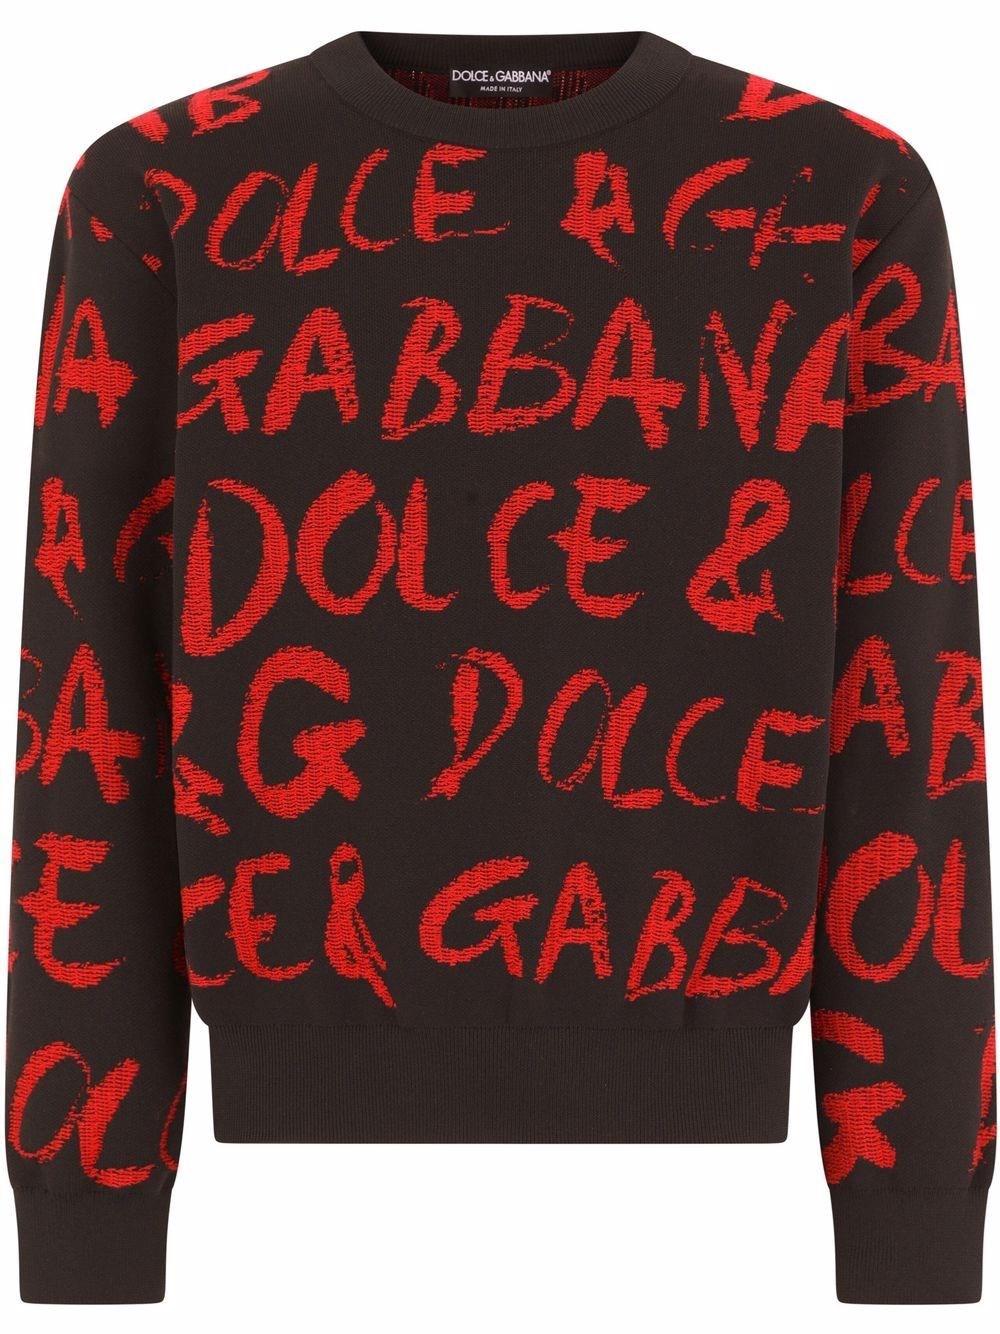 Dolce & Gabbana Black Wool Blend Sweater for Men - Save 17% - Lyst